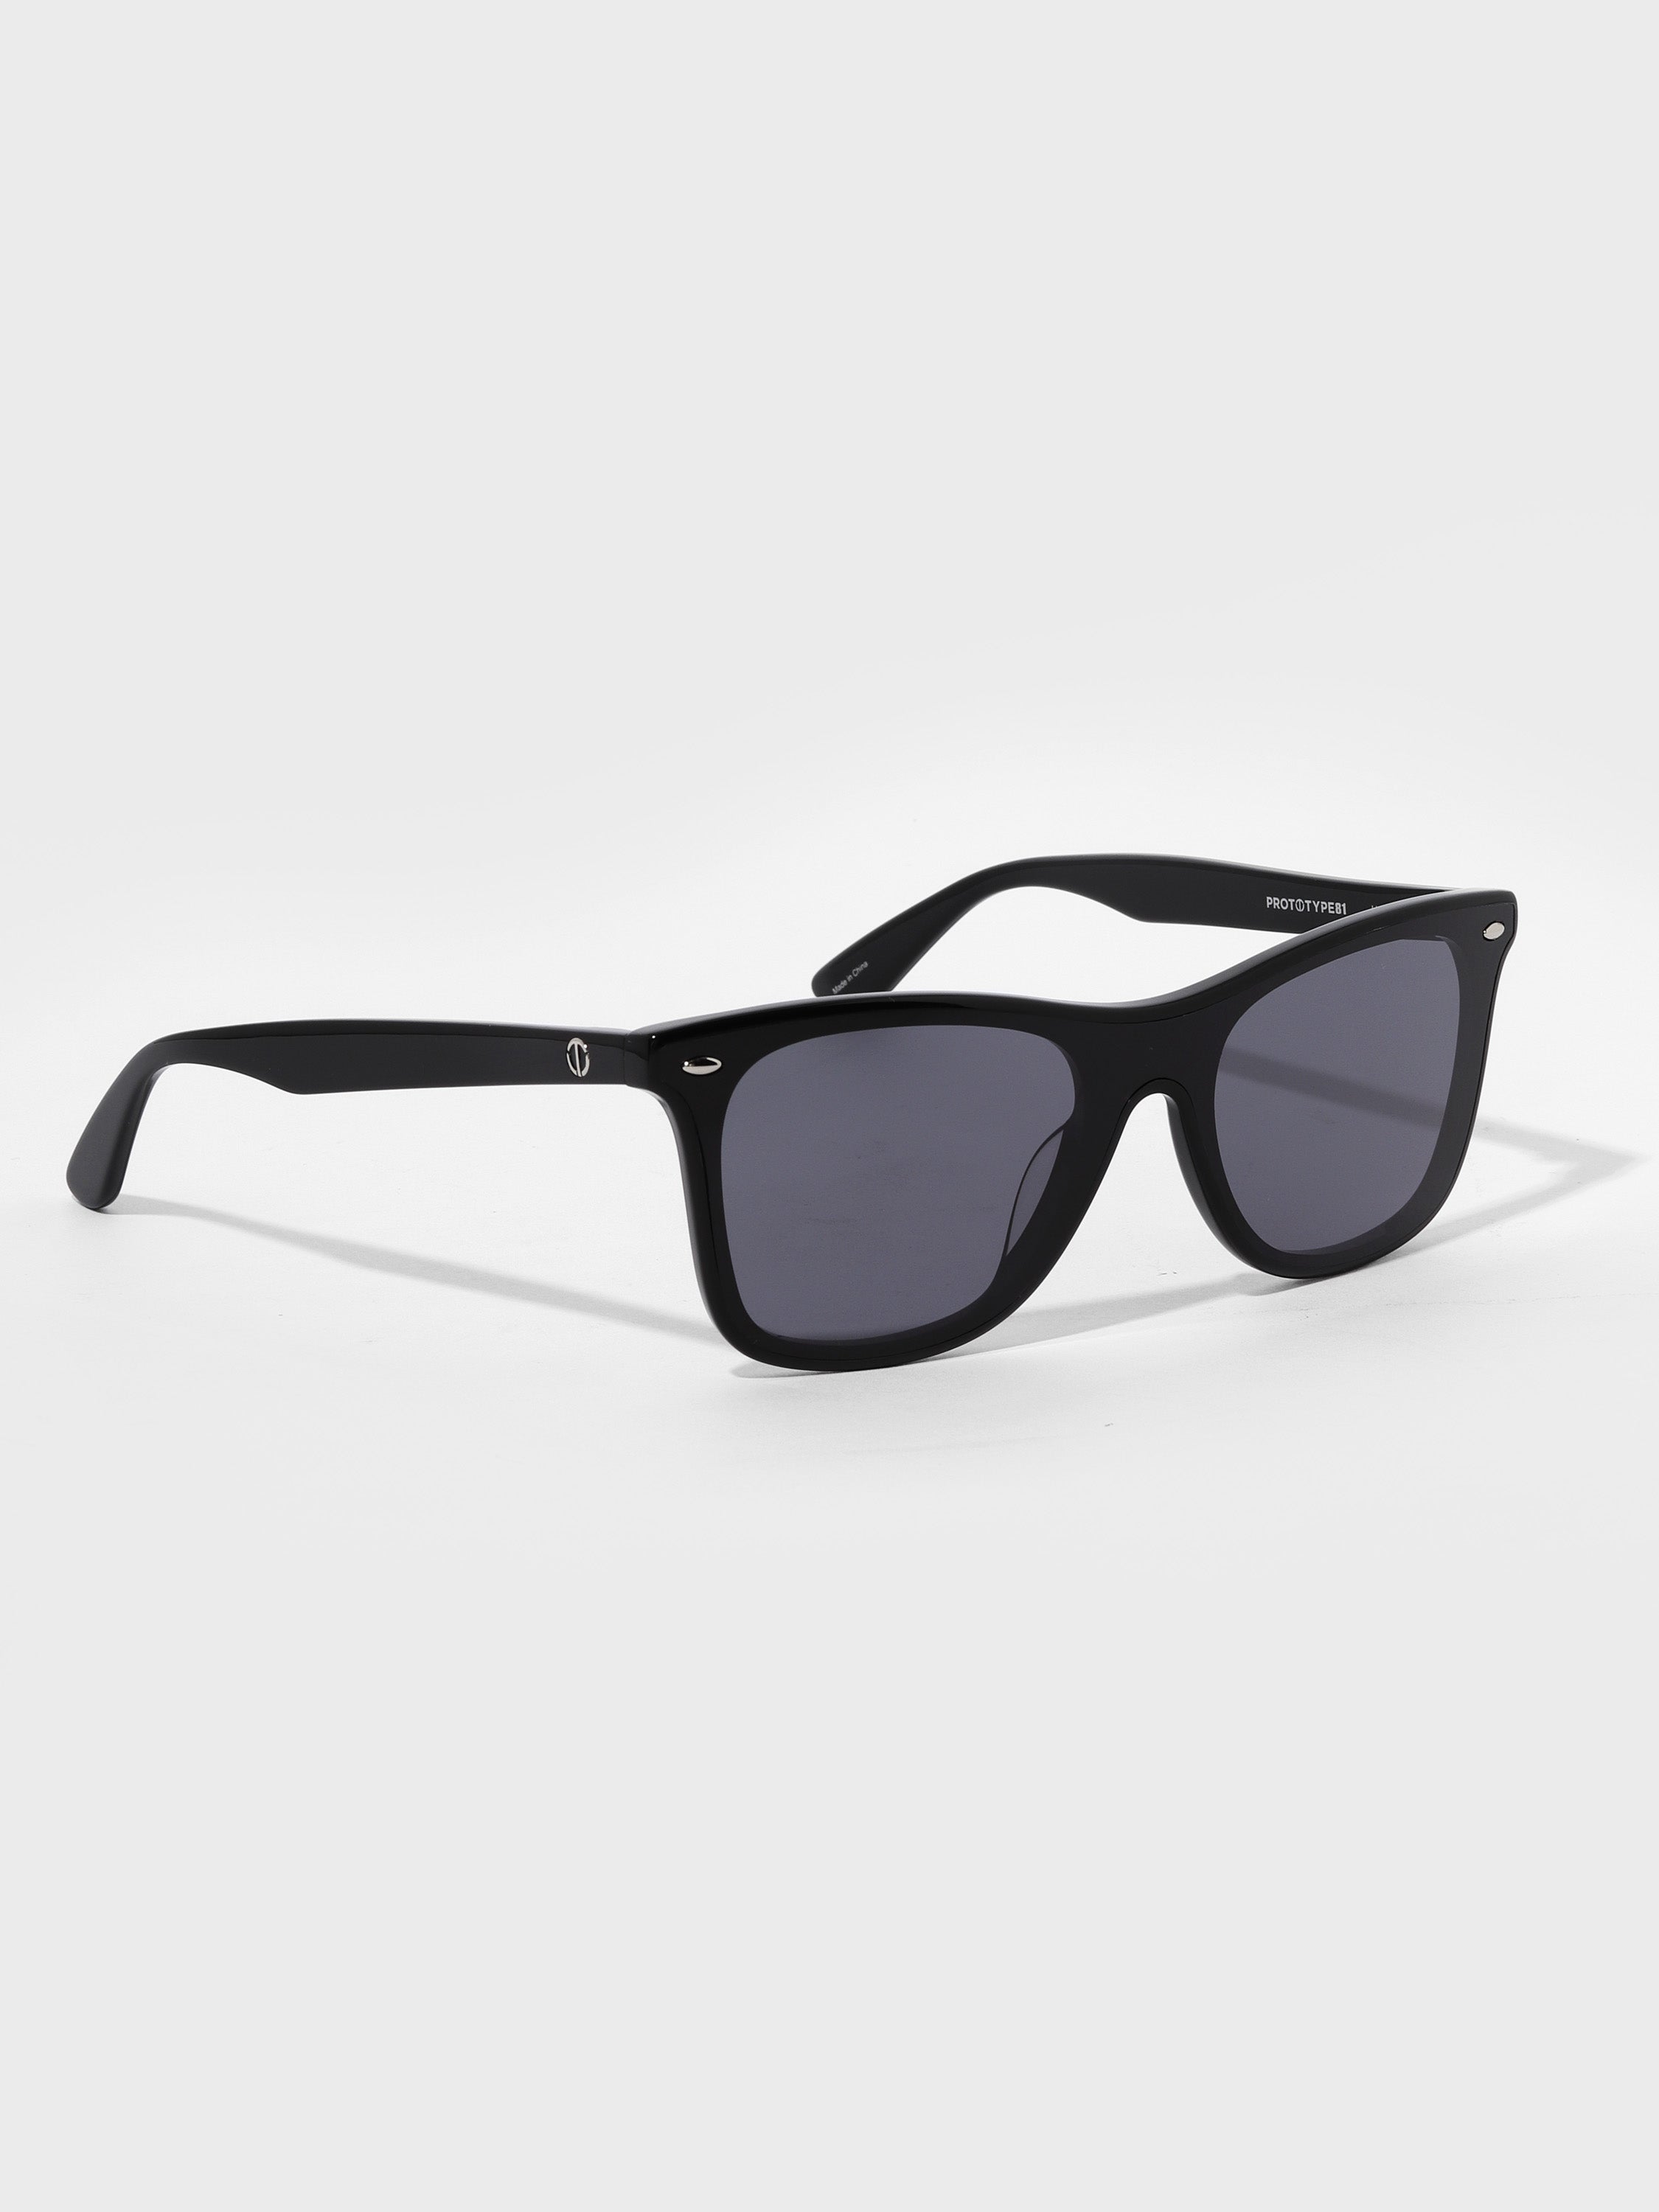 Buy Silver Kartz Black sports blue mercury Vintage Rectangular Sunglasses  for Men/Women Fashion Mens Sun glasses at Amazon.in